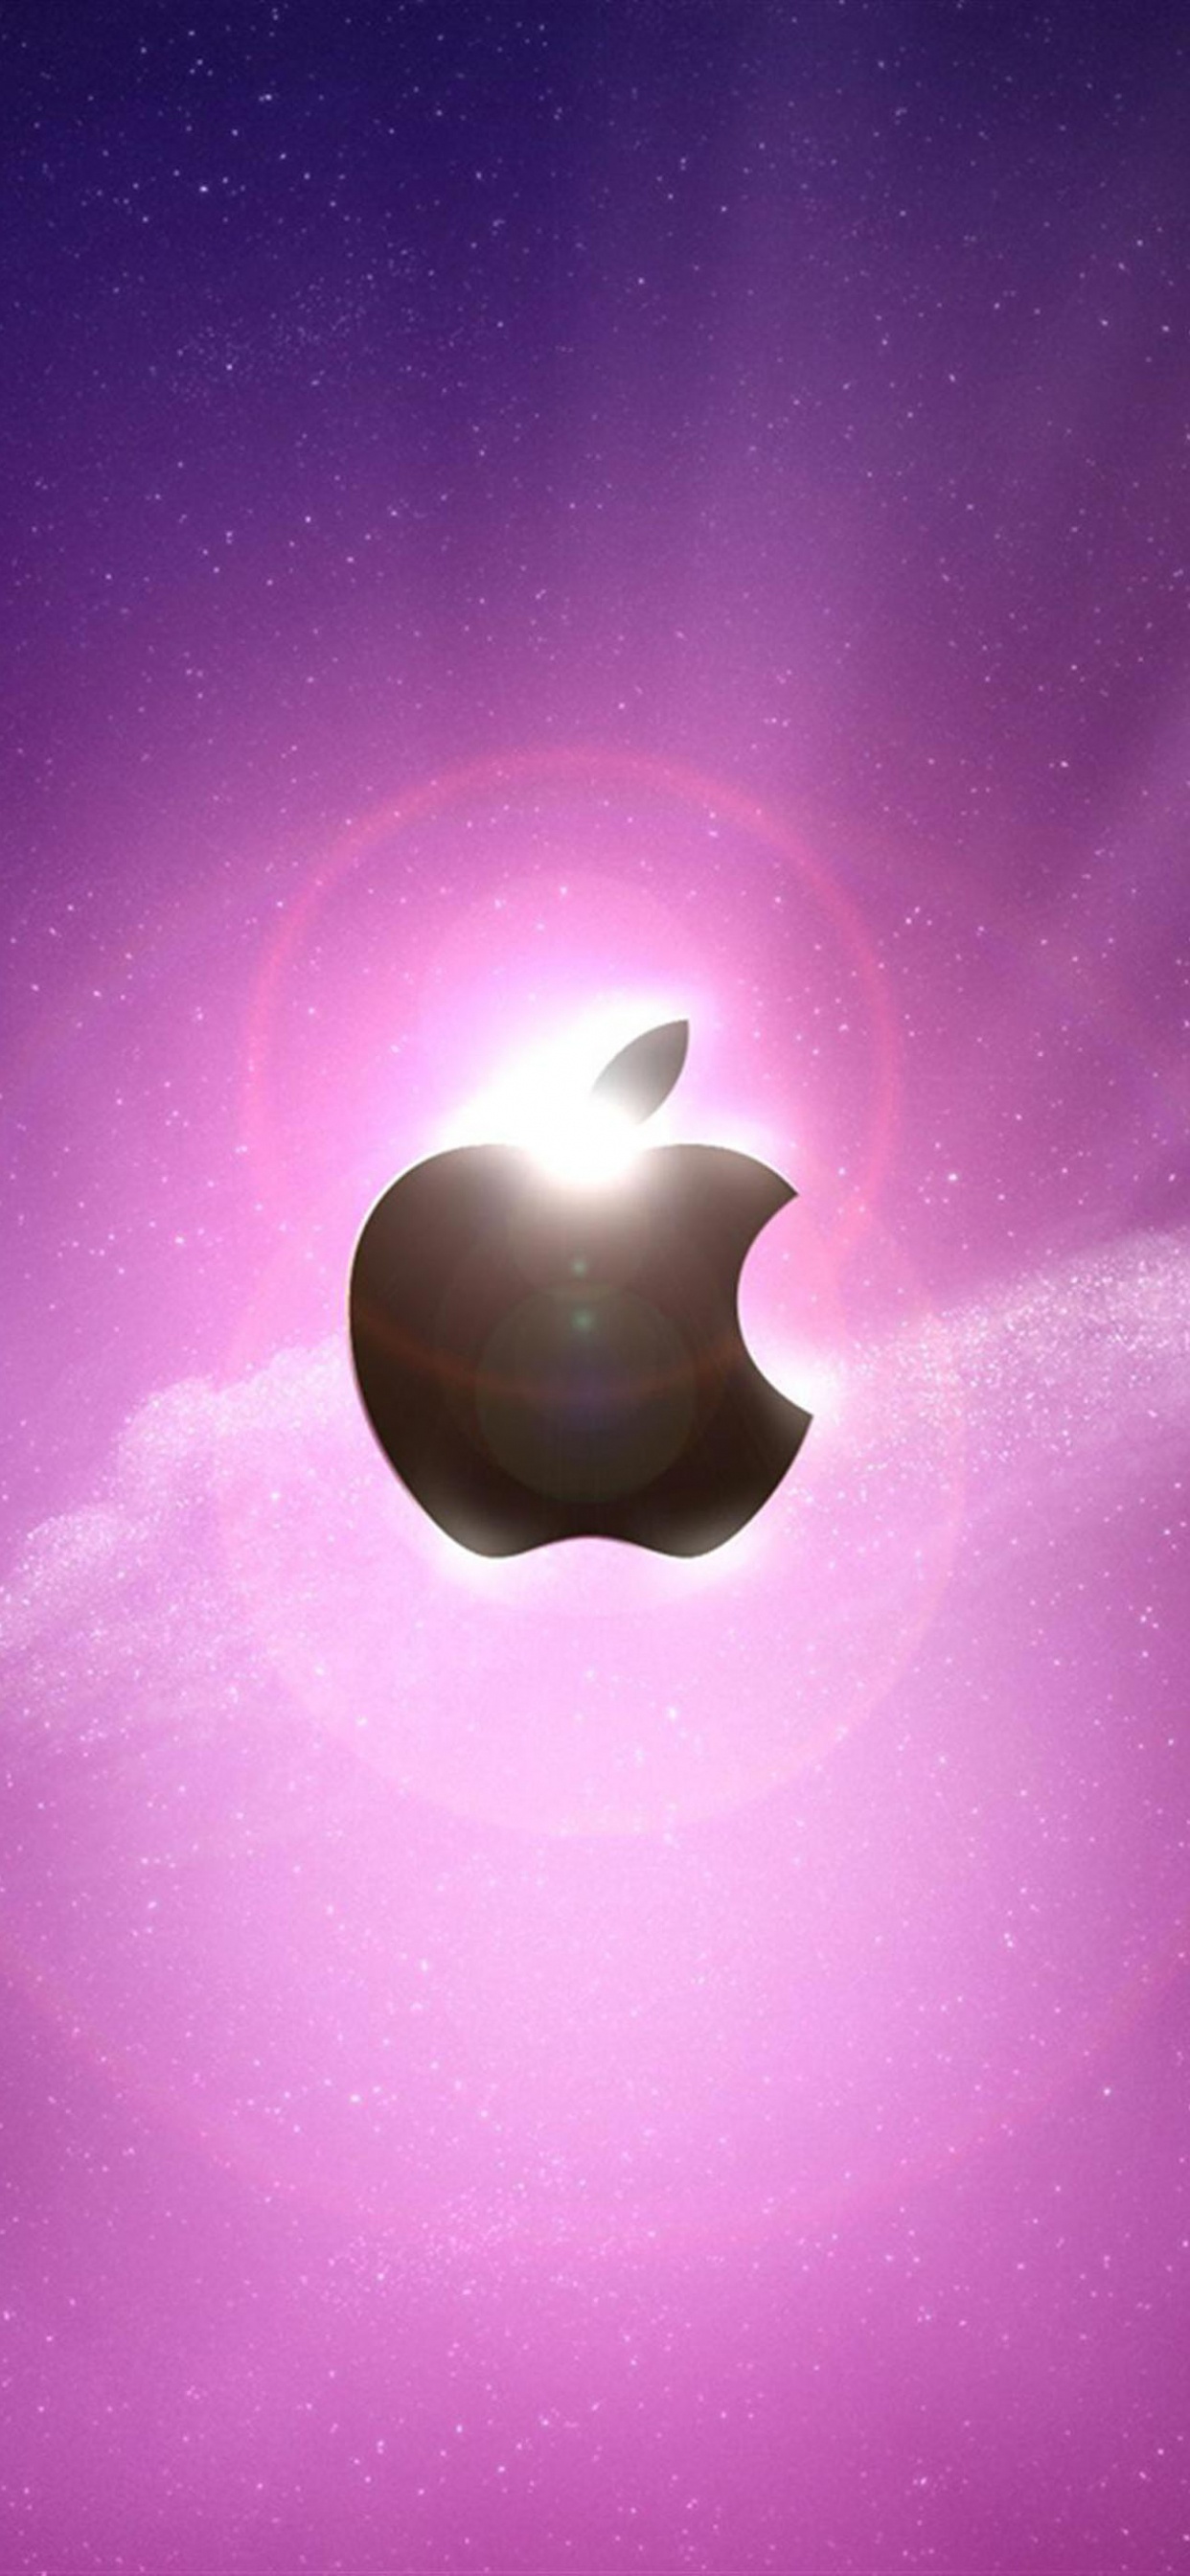 Apple MacBook Pro, Purple, Violette, Atmosphère, Espace. Wallpaper in 1242x2688 Resolution